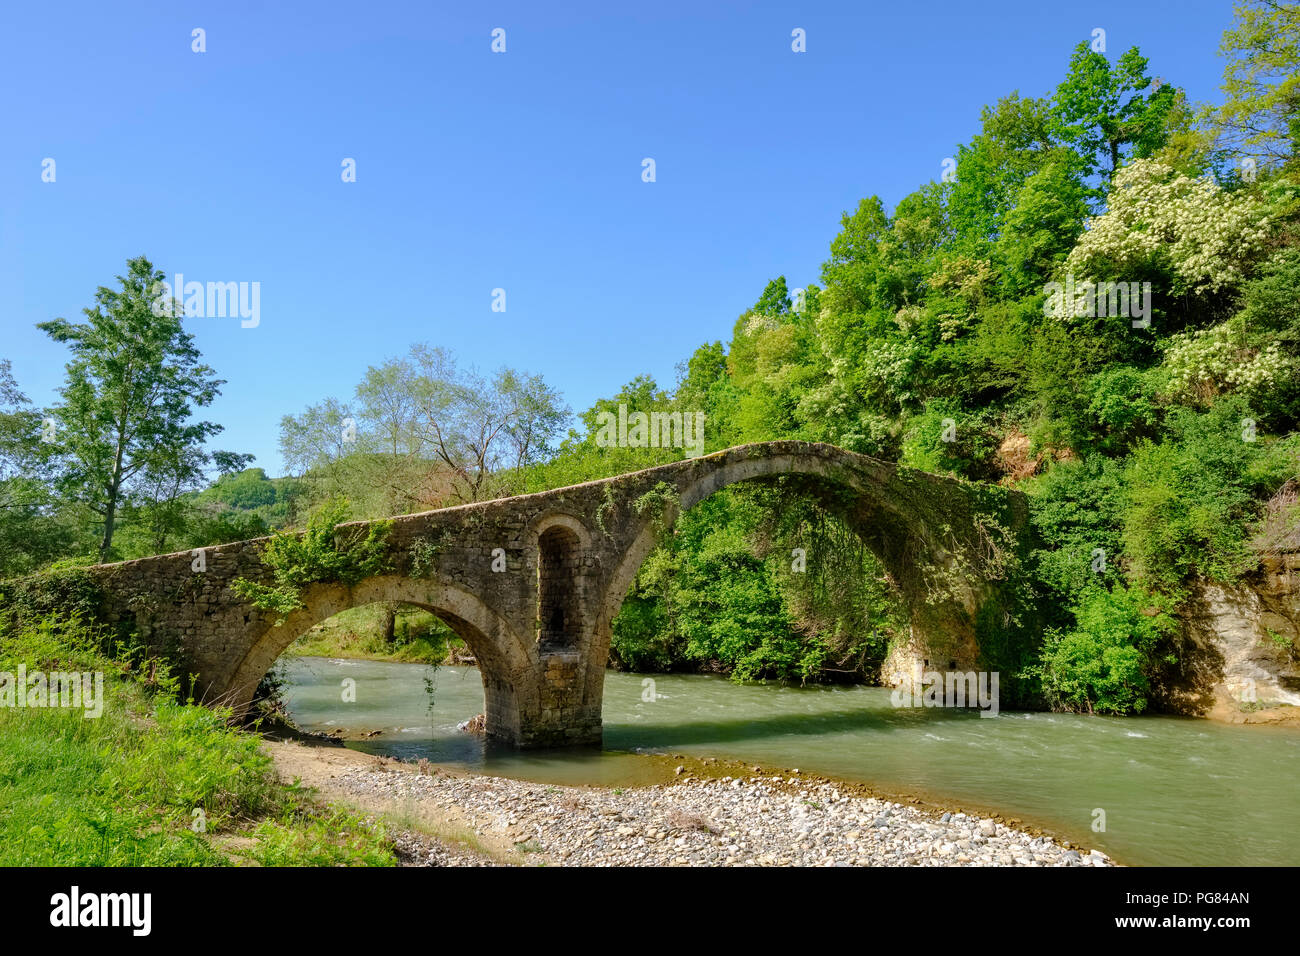 Albania, Korca, Osman arch bridge Ura e Golikut, Shkumbin river Stock Photo